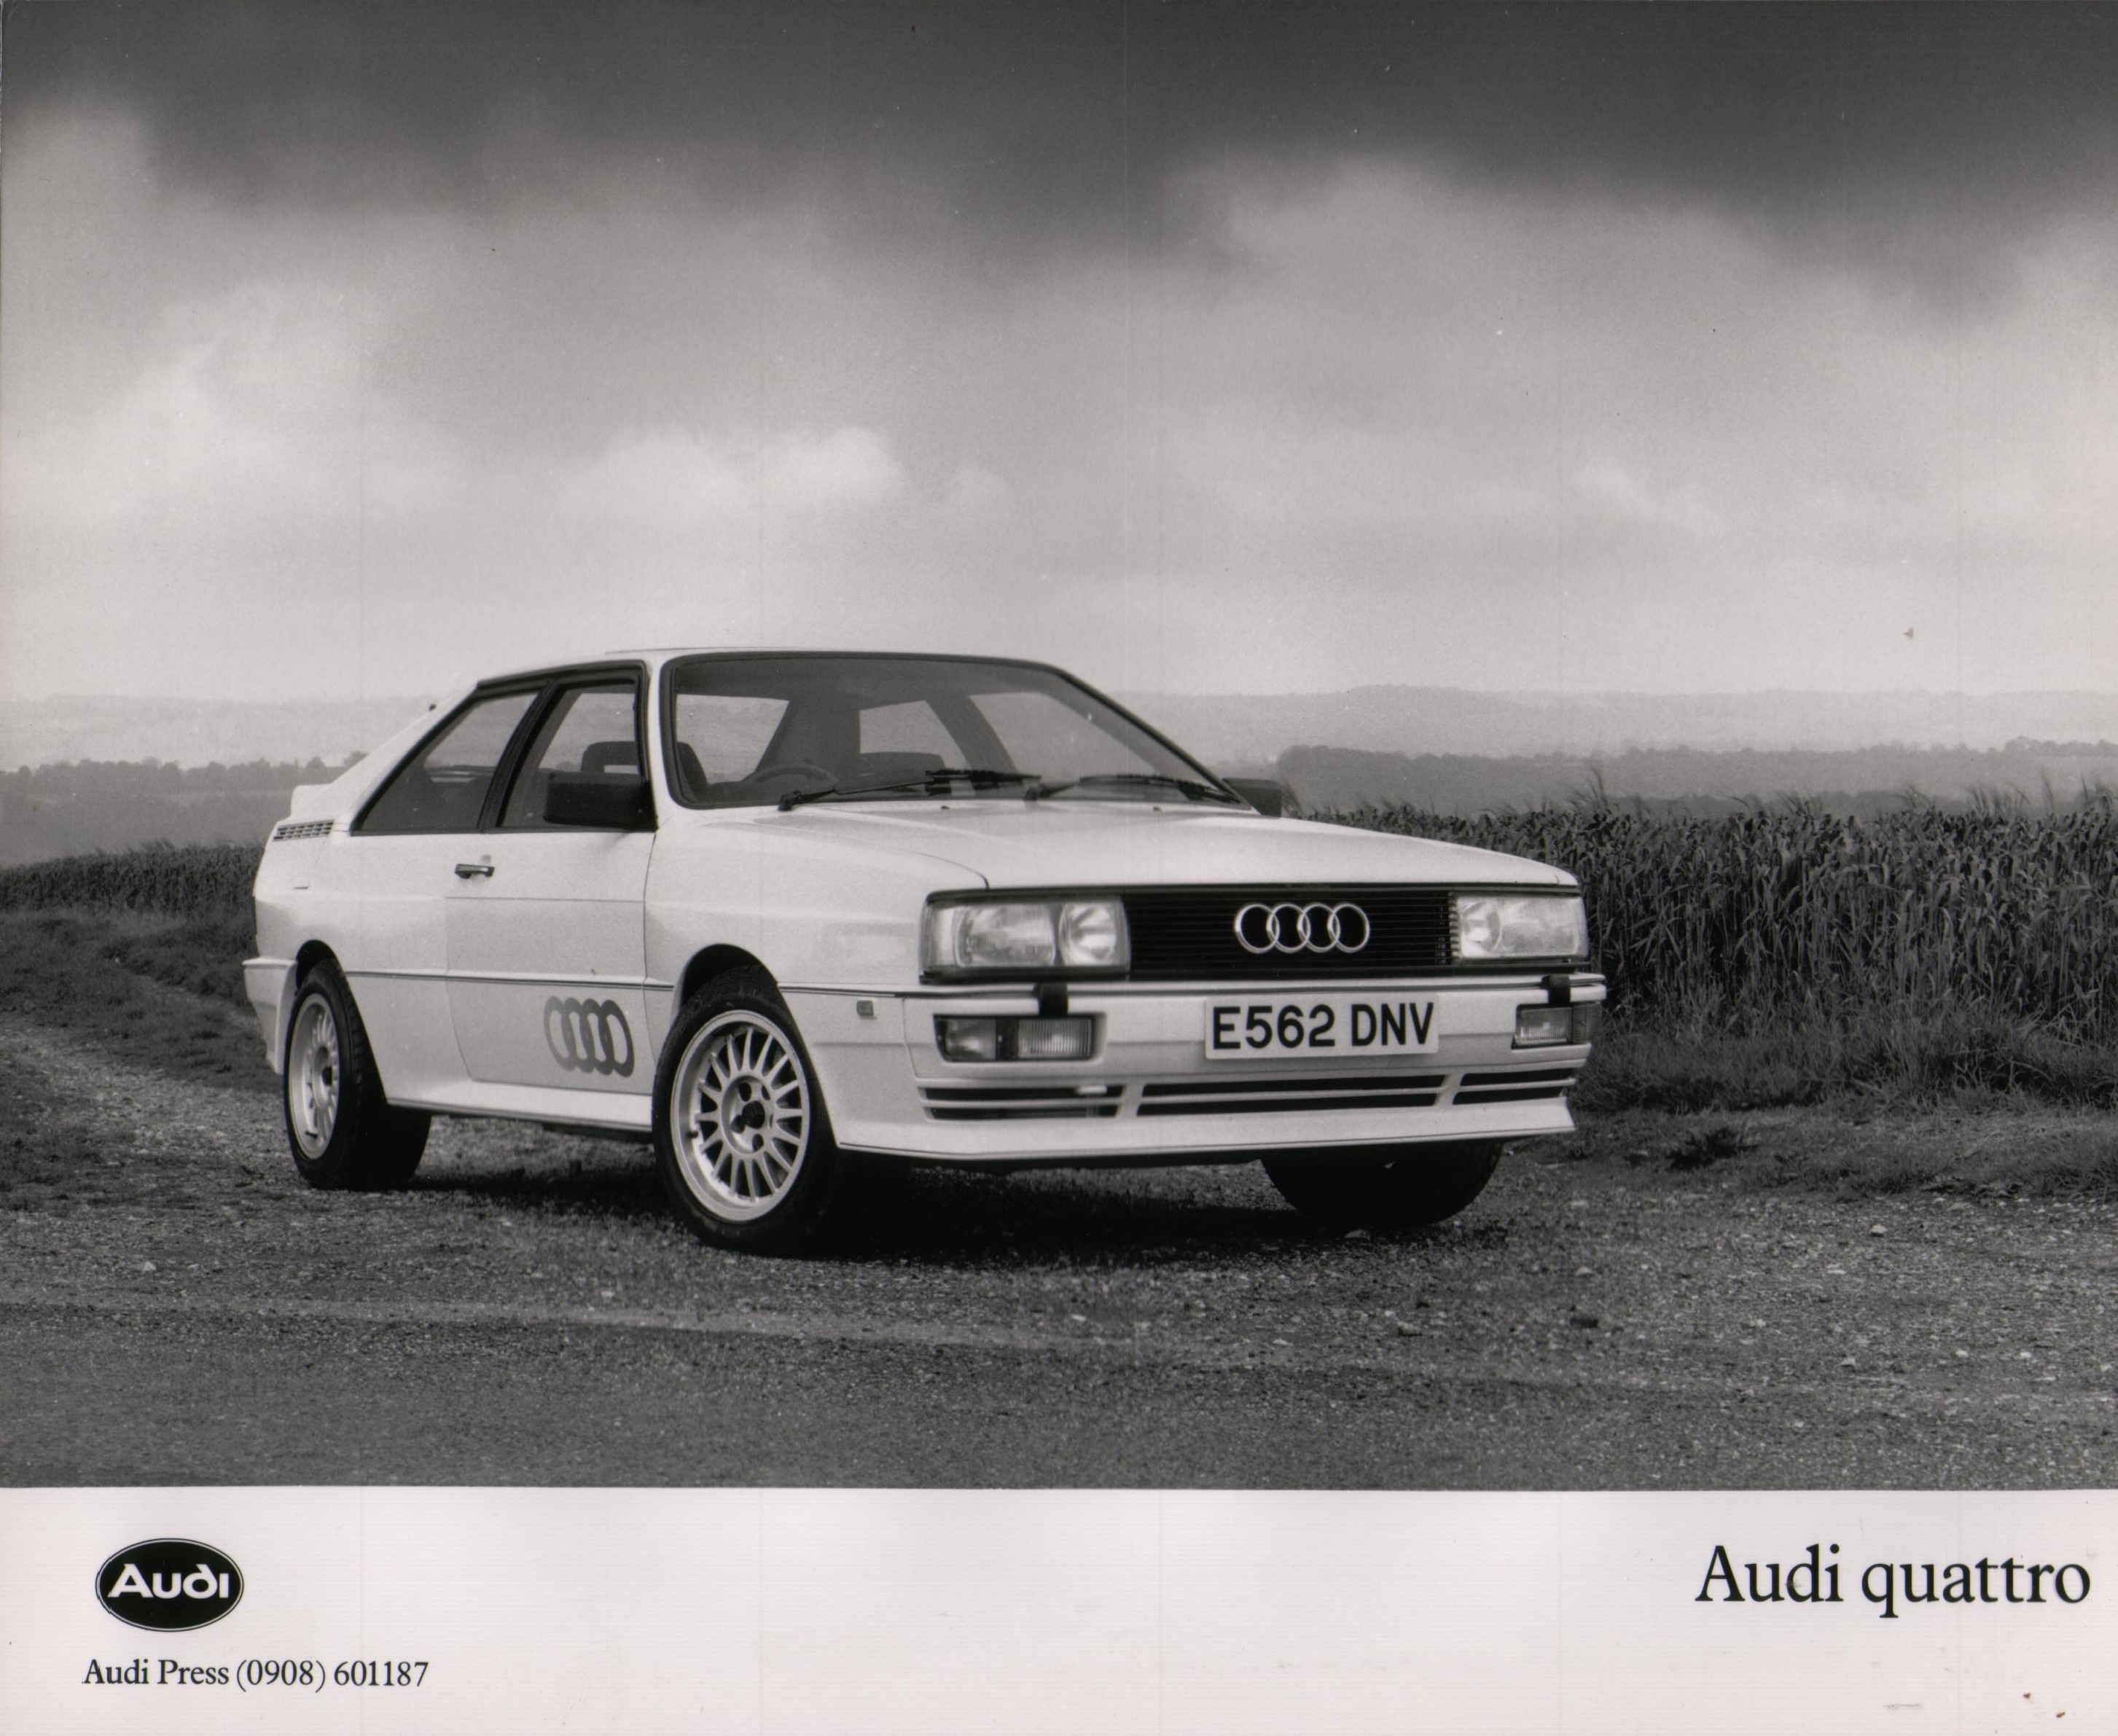 1980 Audi quattro - Car Pictures, Photos, Spy Shoot, Wallpapers ...